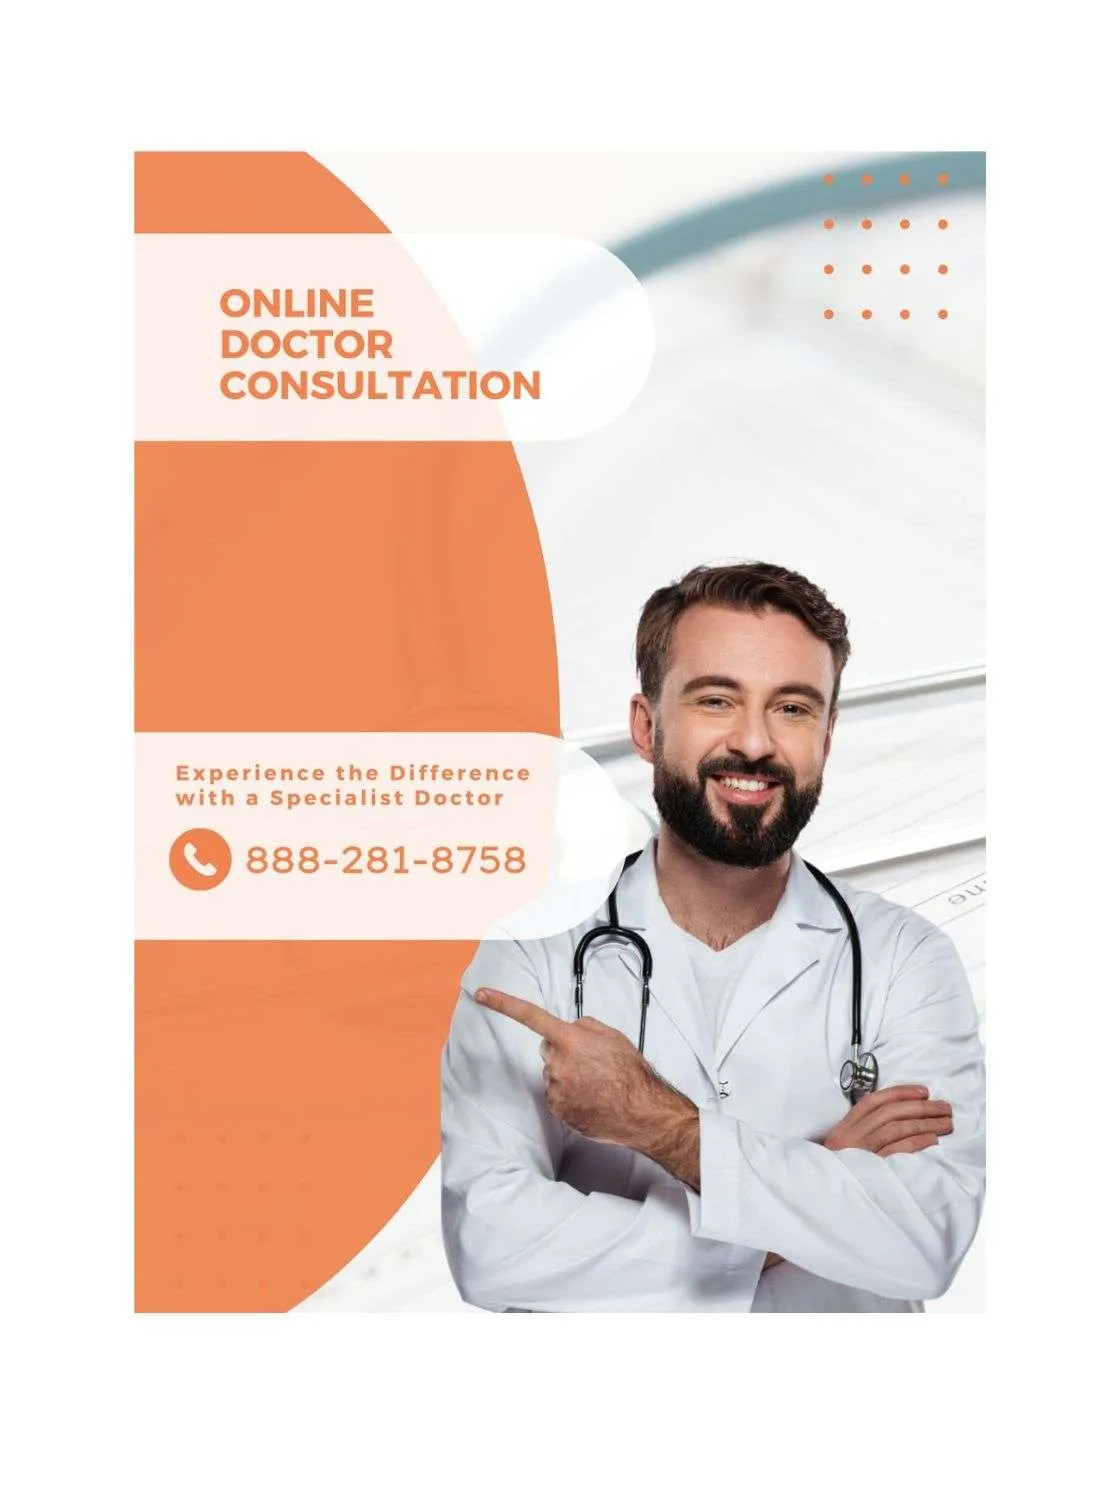 Online Doctor Consultation -My MMJ DOCTOR